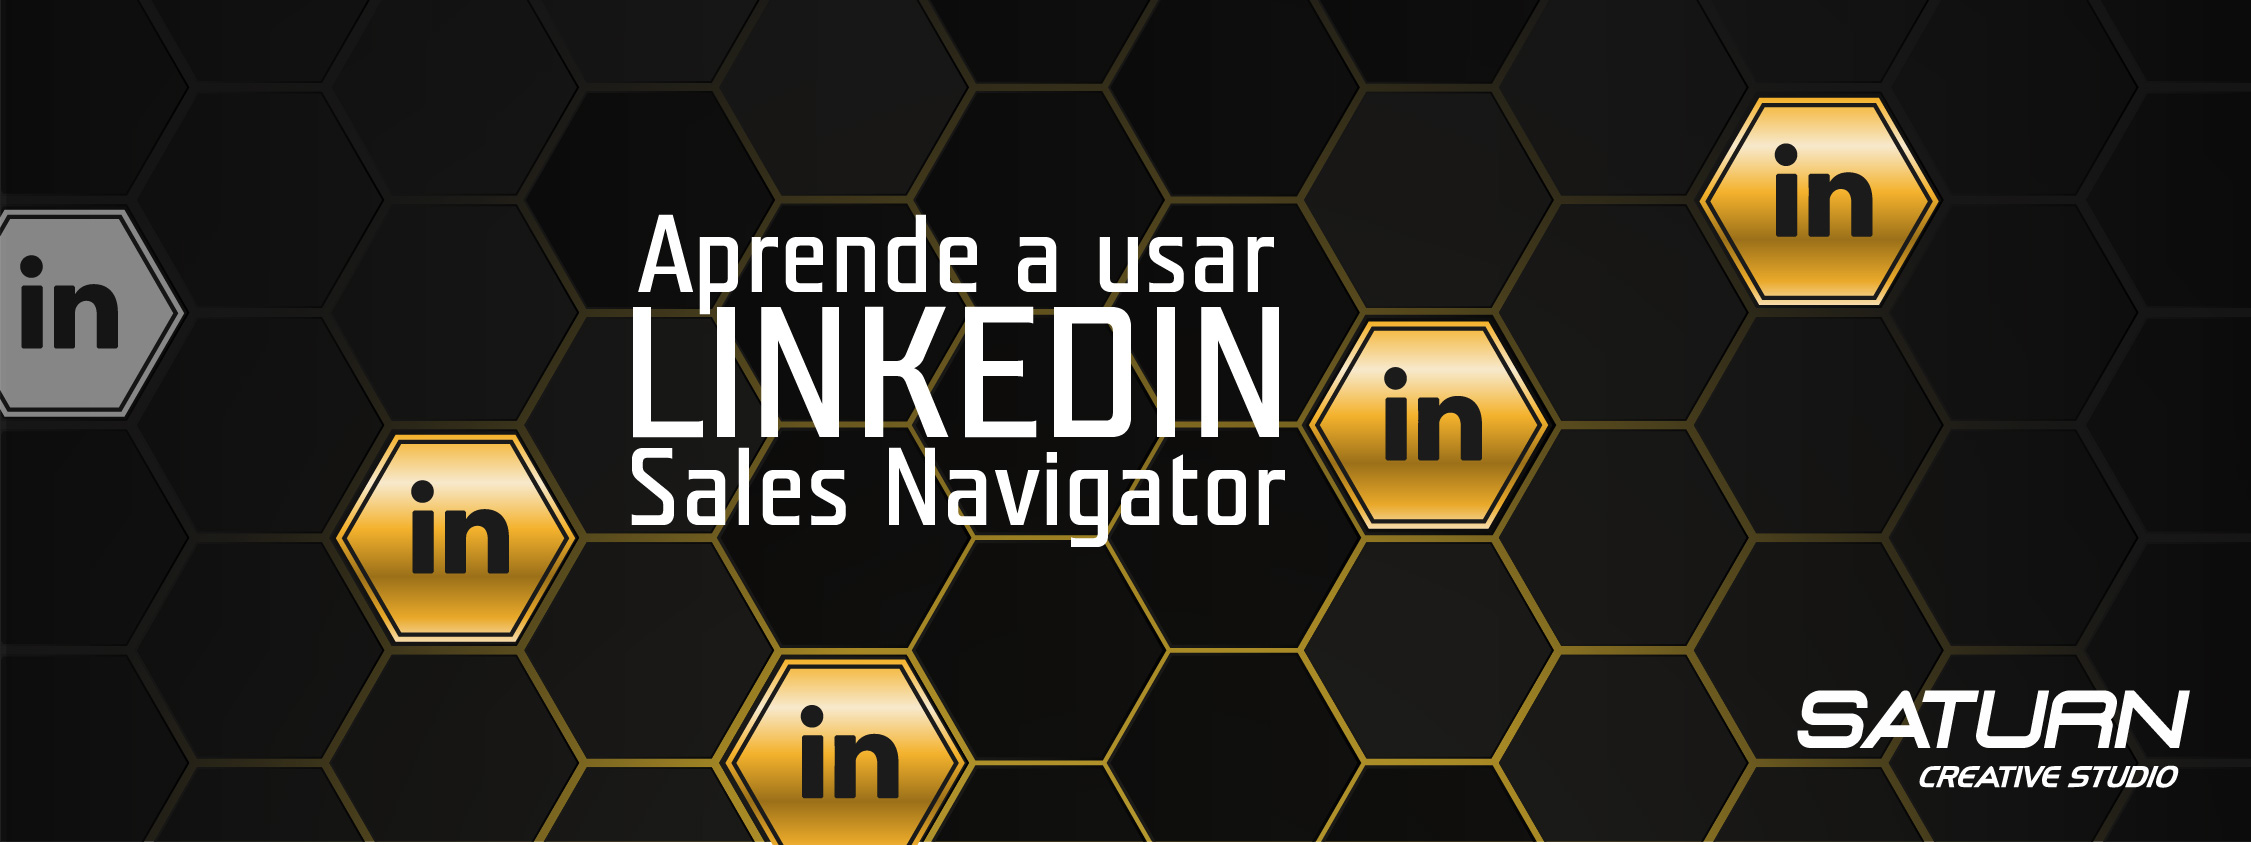 Aprende a usar LinkedIn Sales Navigator